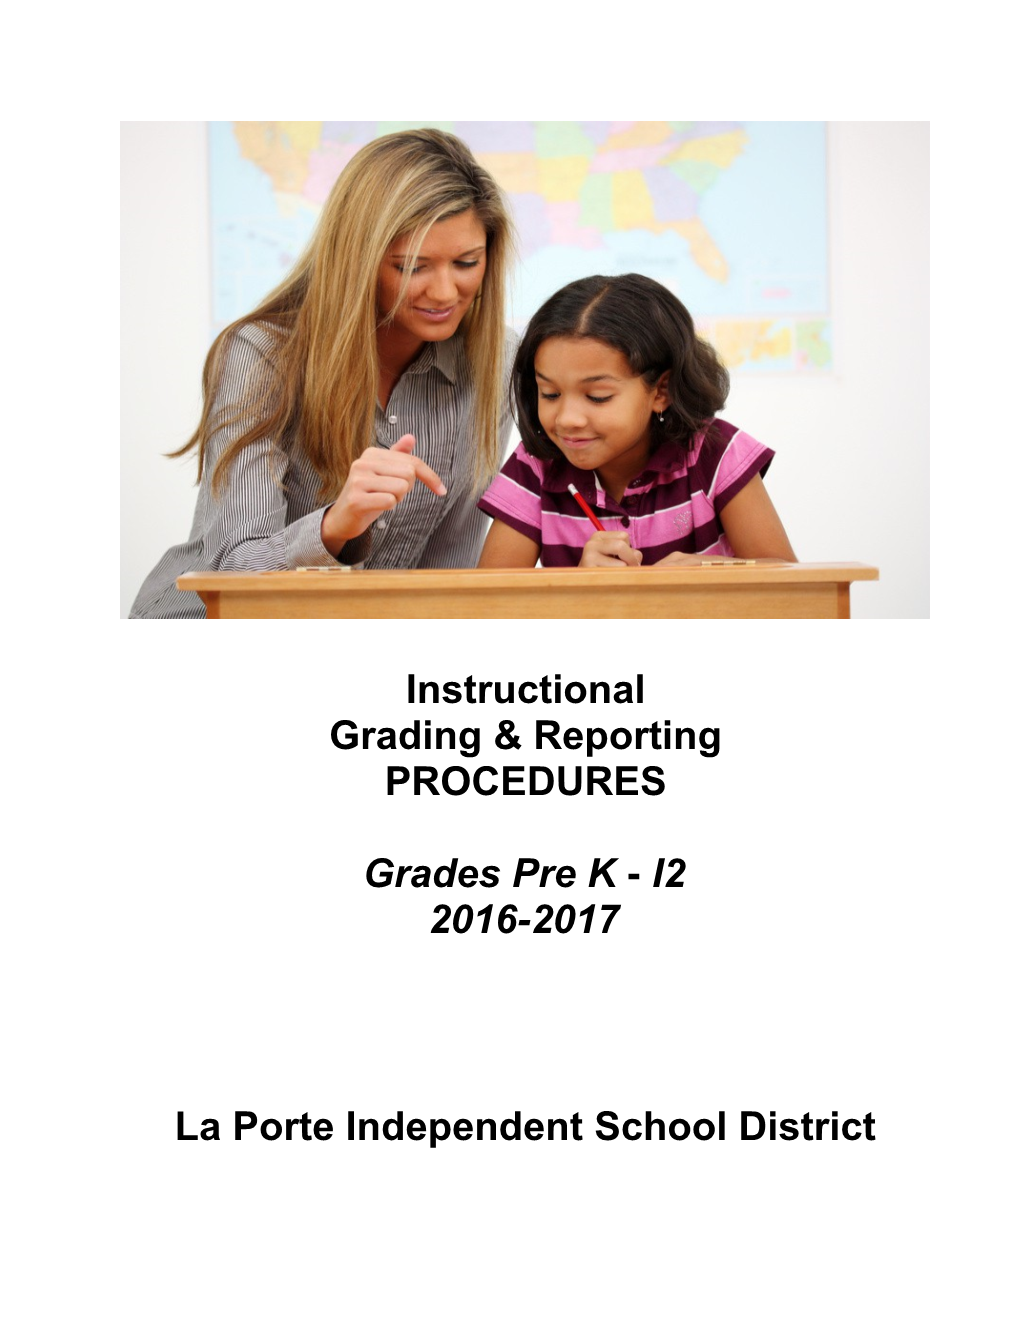 La Porte Independent School District